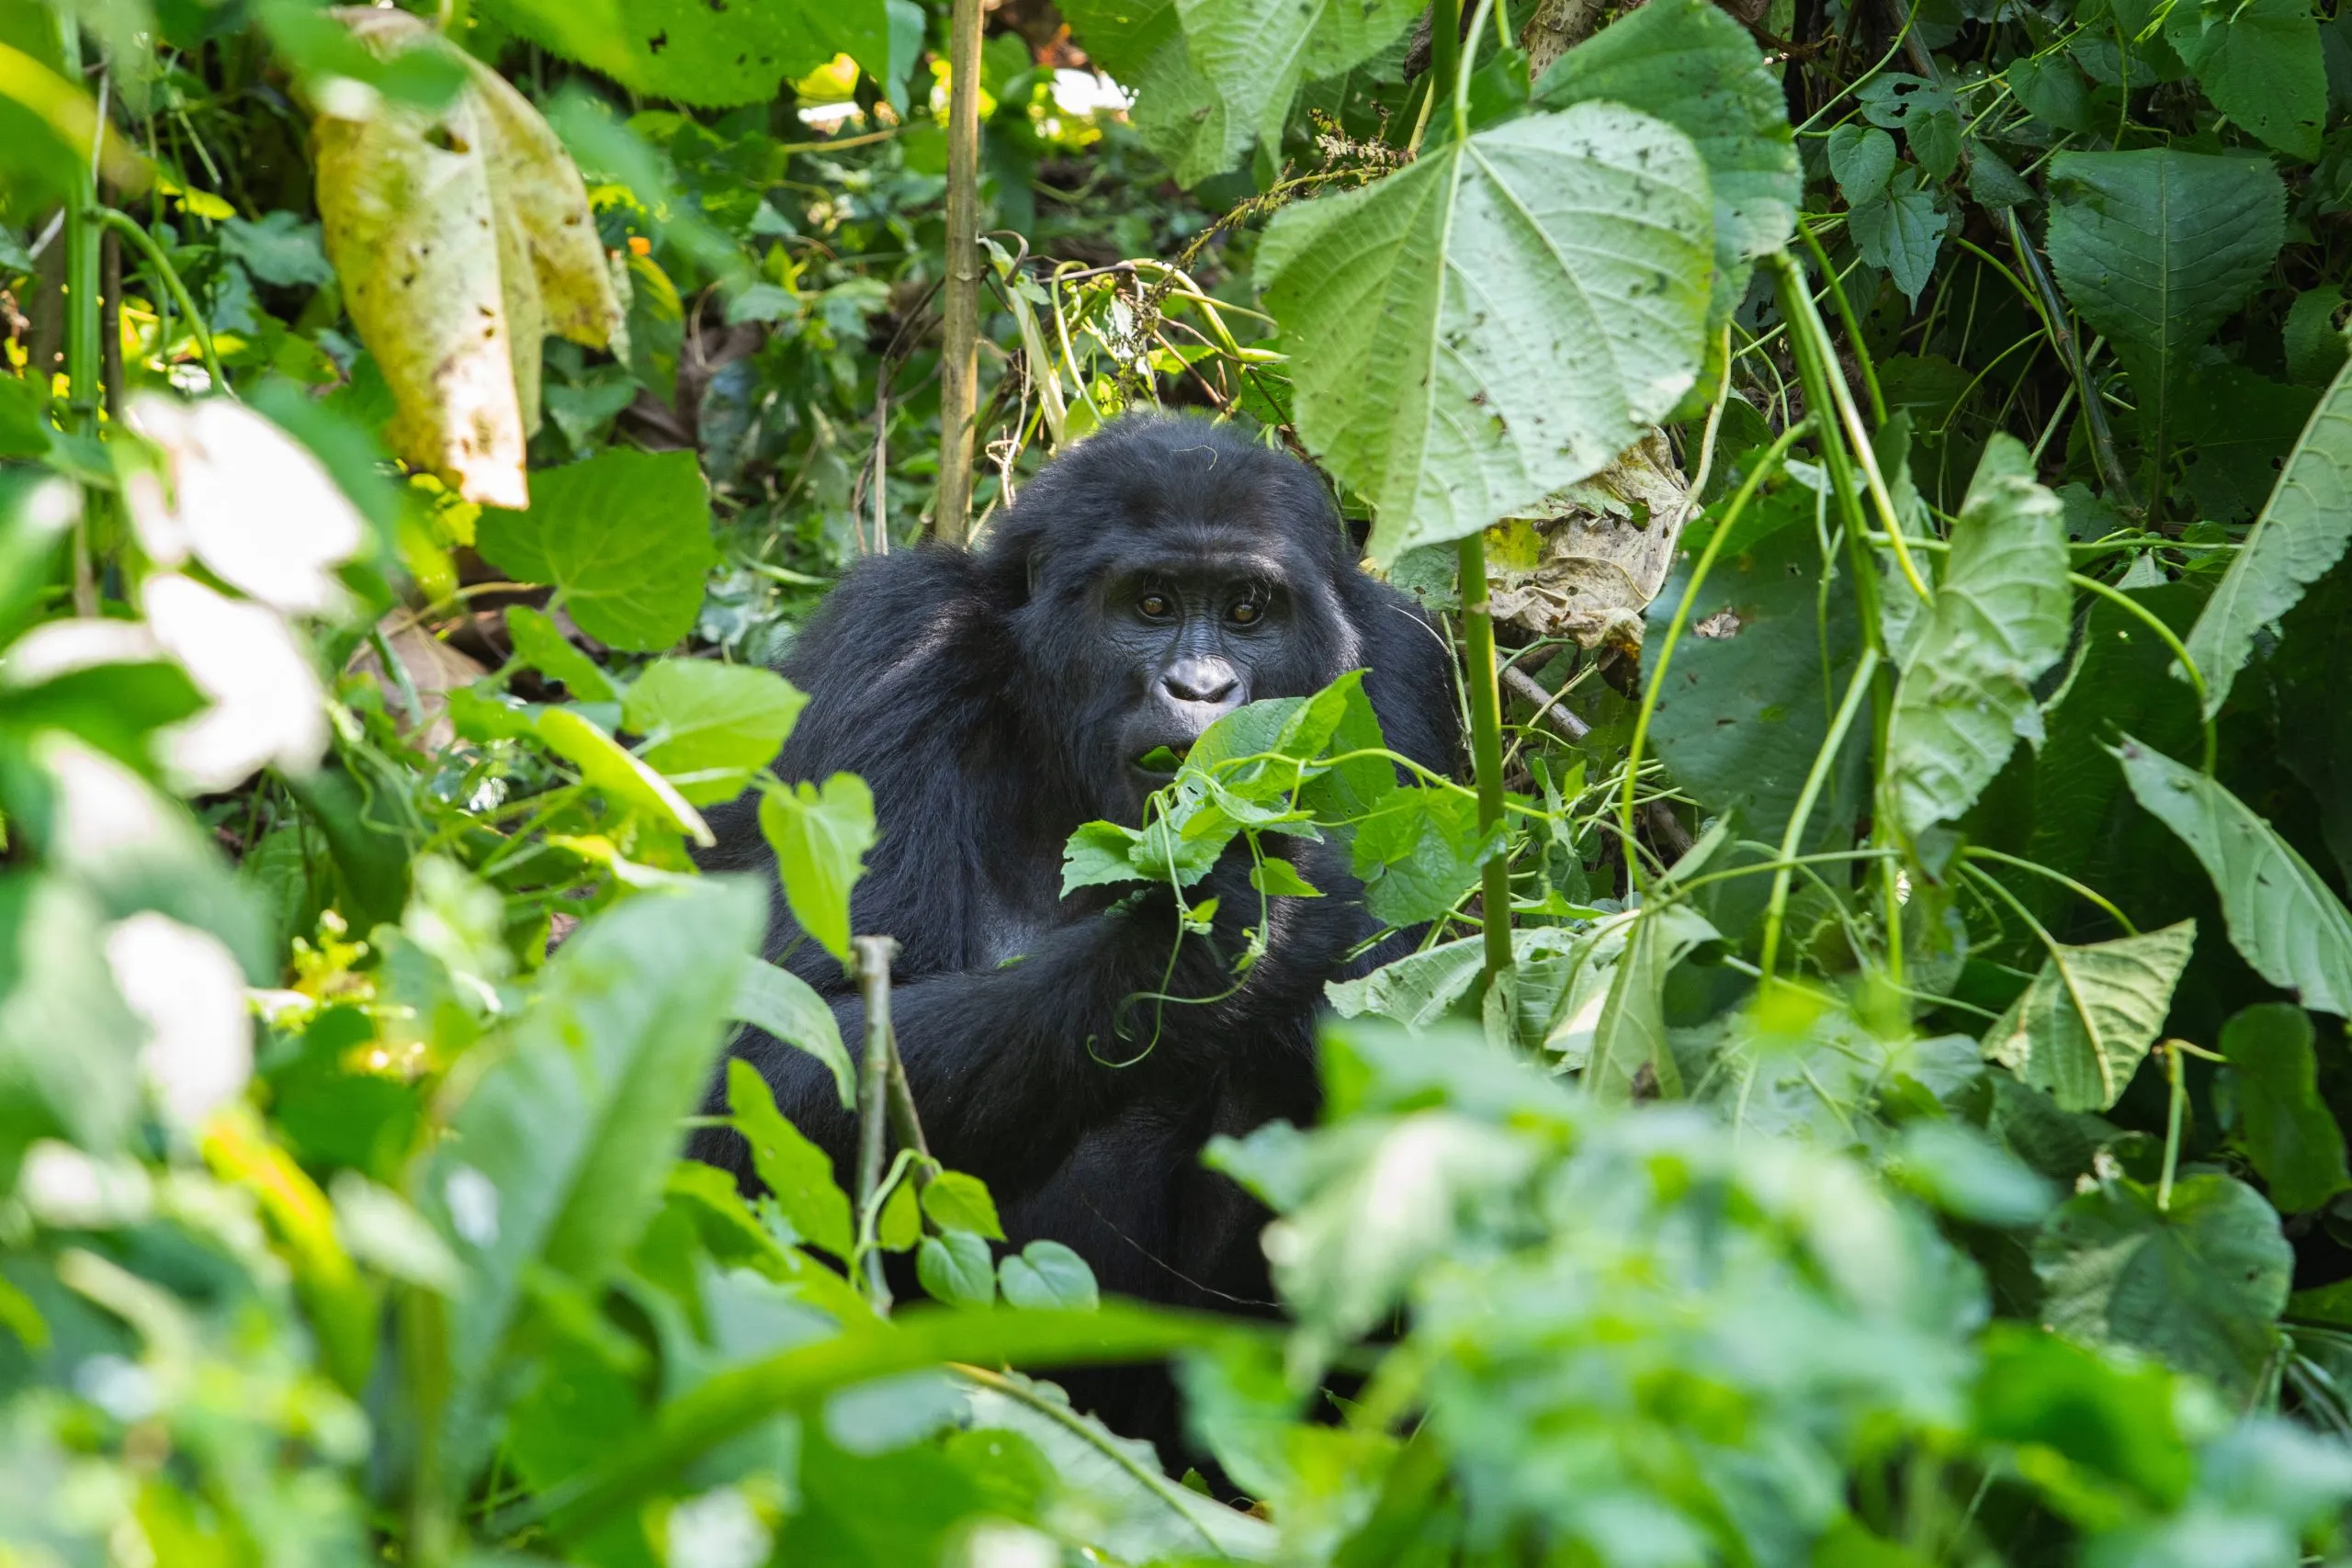 Bergsgorilla i nationalparken Bwindi Impenetrable. Gorilla i sin naturliga miljö. Vilda djur i Uganda.